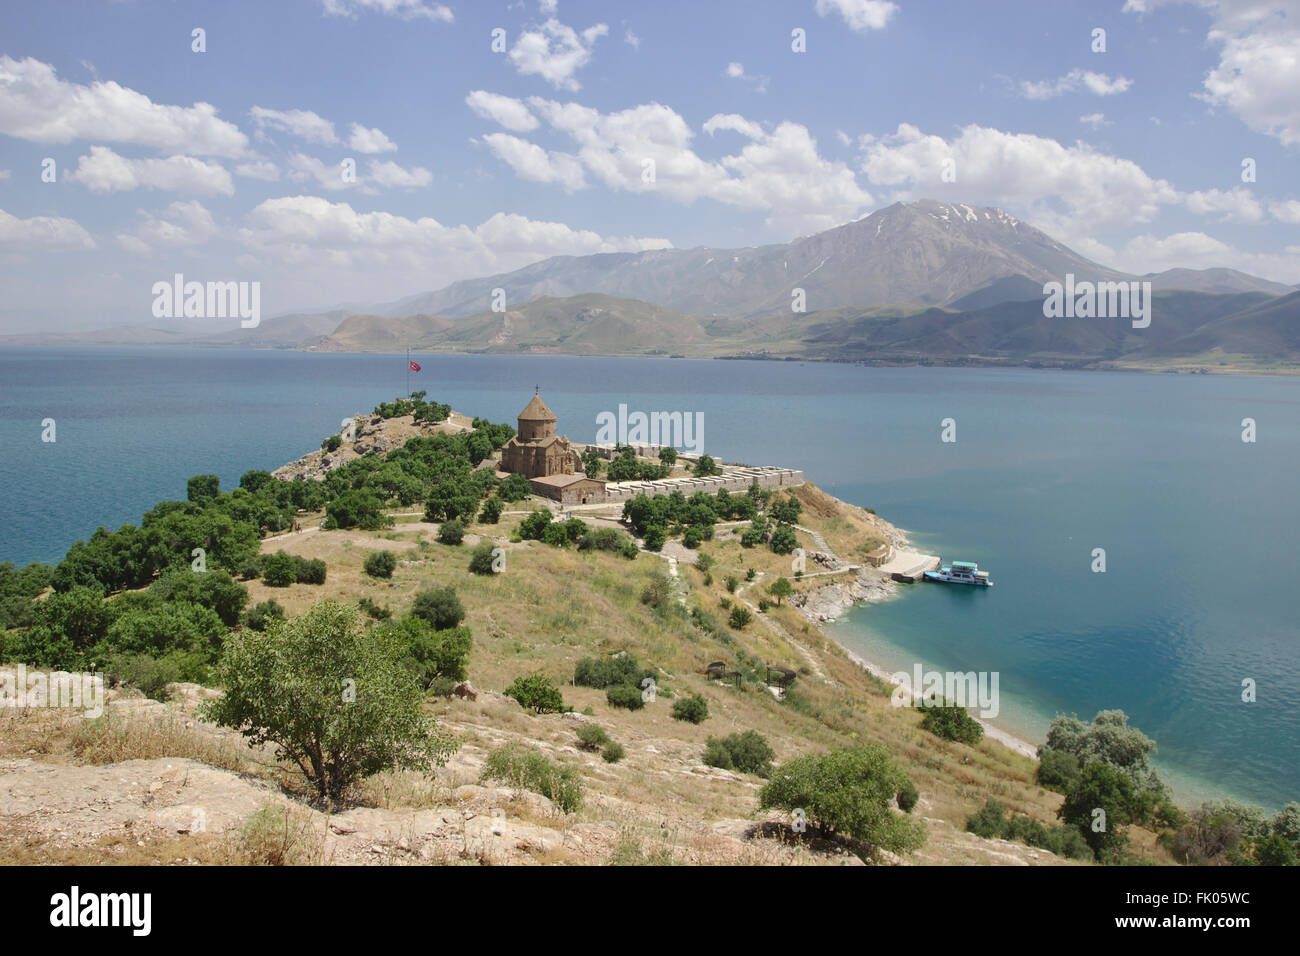 Akdamar church, church of the holy cross, Akdamar island on Lake Van, Eastern Anatolia, Turkey Stock Photo